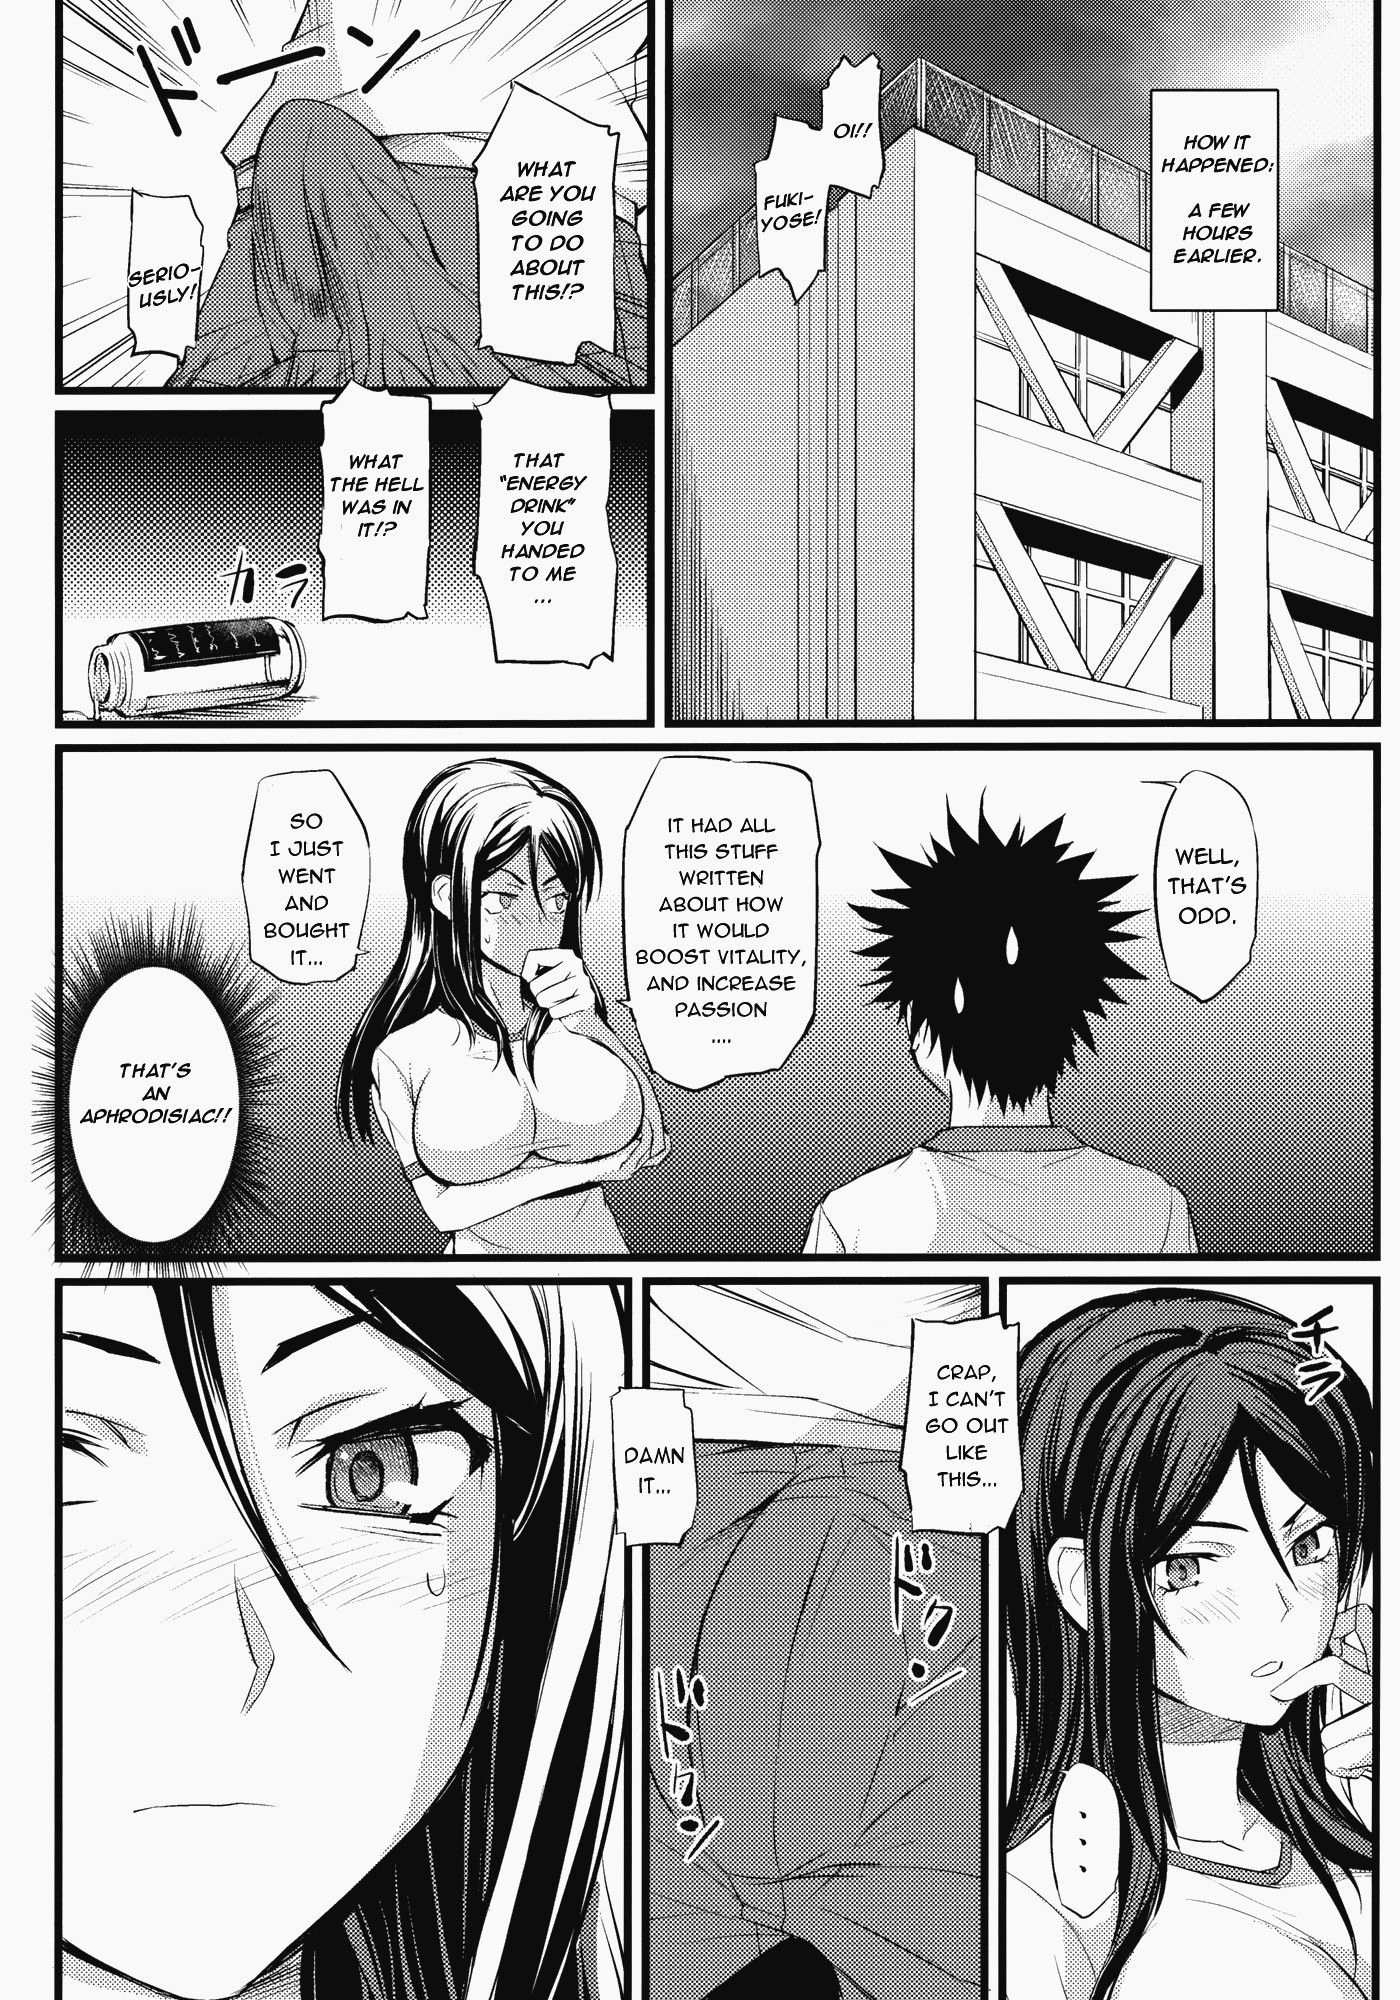 Fukiyose's Way of Health page 03